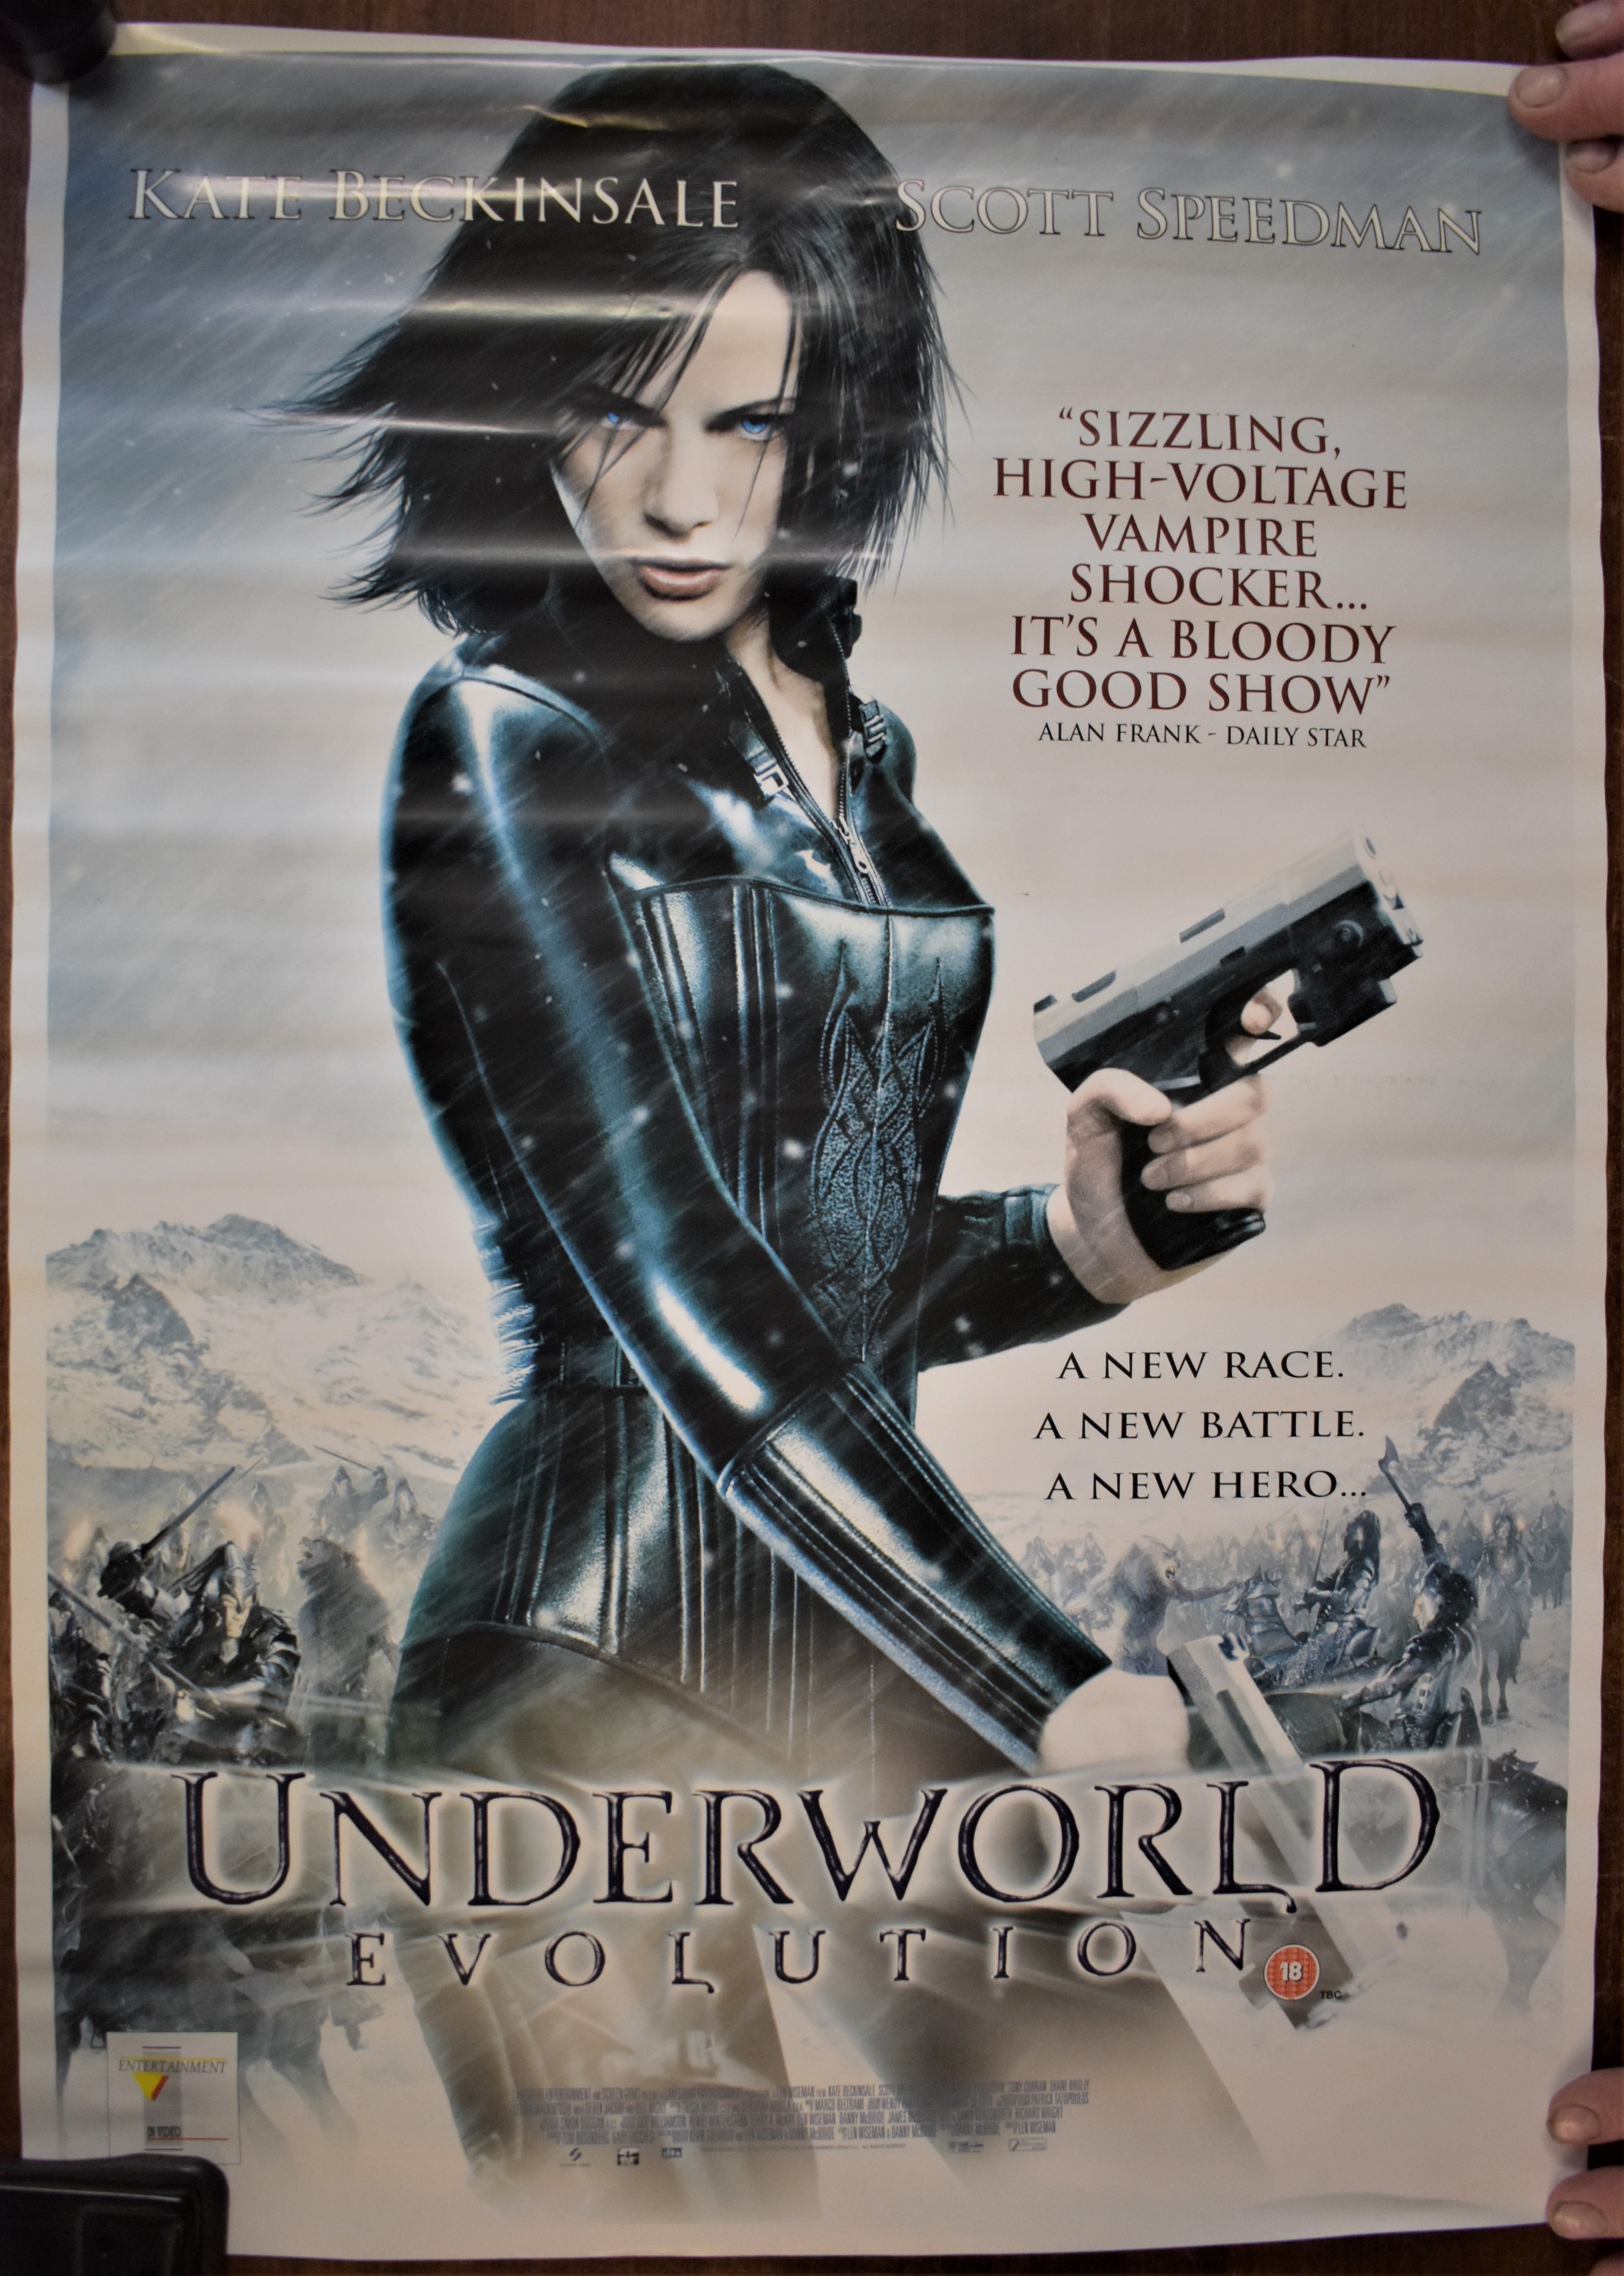 Underworld Evolution - Cinematic Poster, starring Kate Beckinsale and Scott Speedman. Released Jan